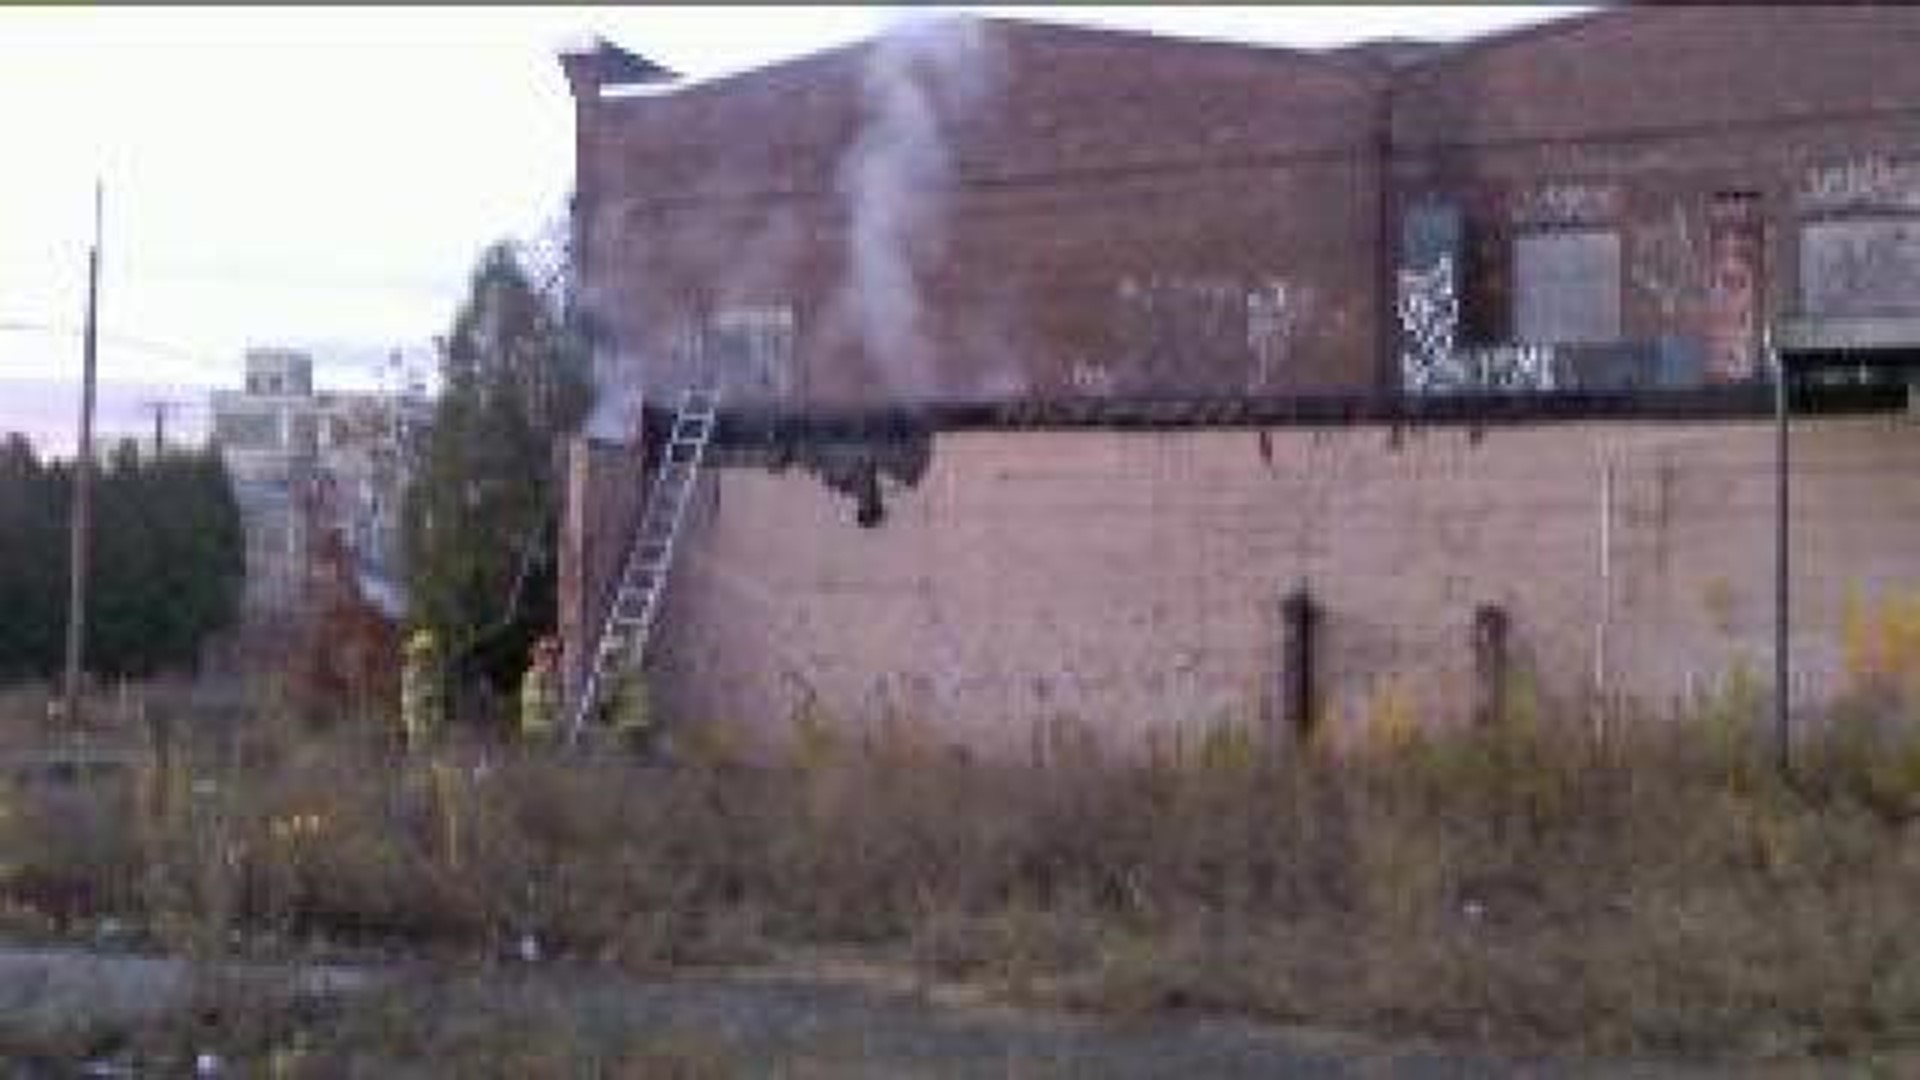 Fire Crews Extinguish Flames in Vacant Building